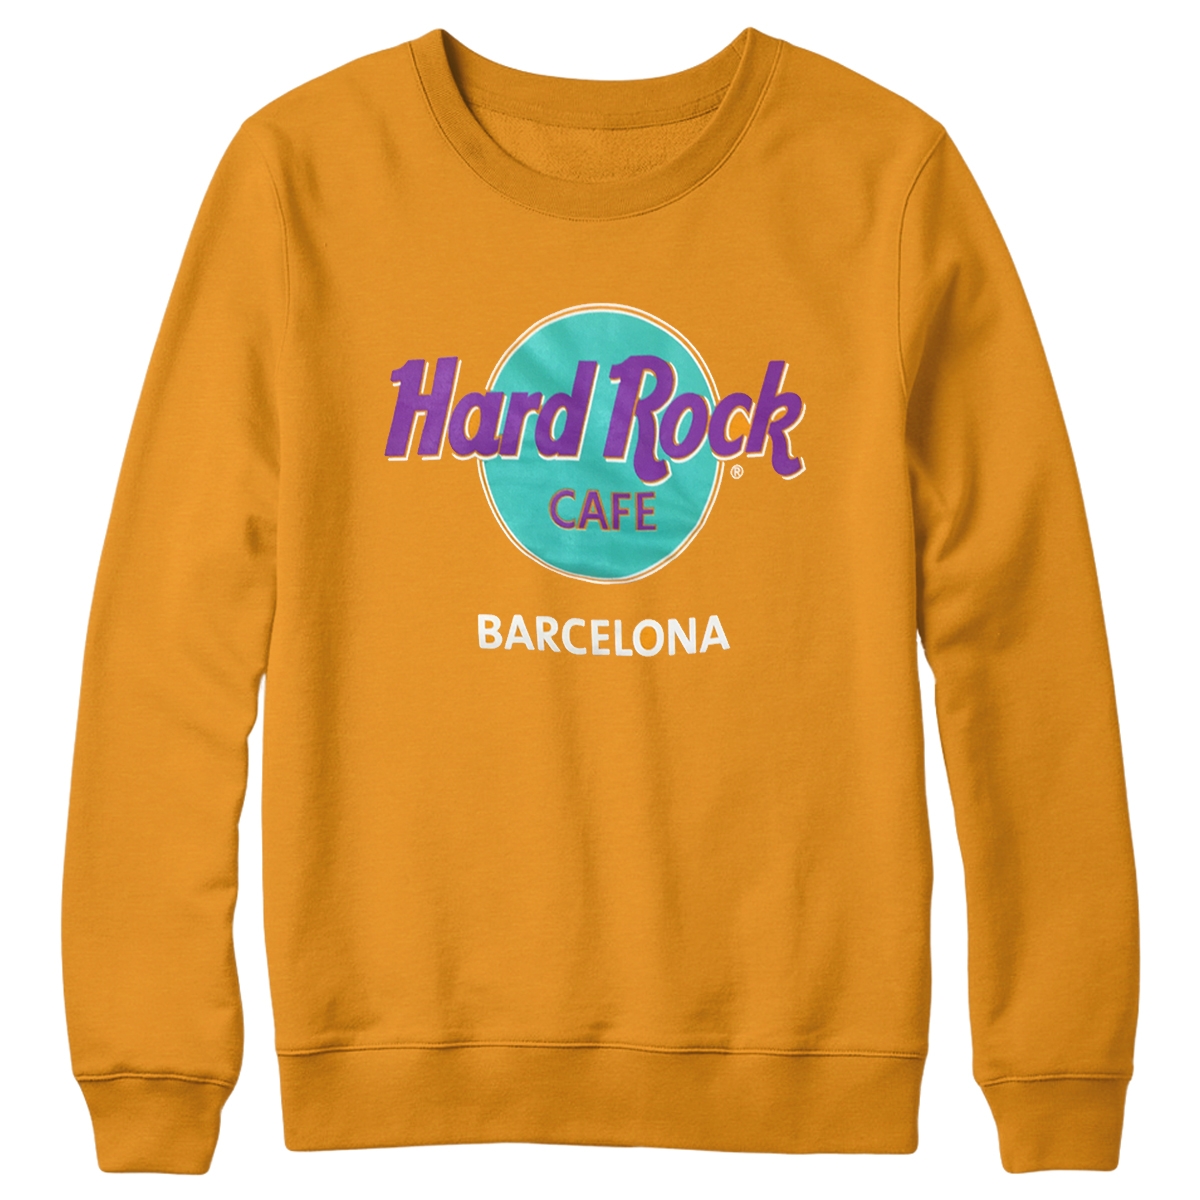 Hard Rock Cafe T Shirt Size Chart